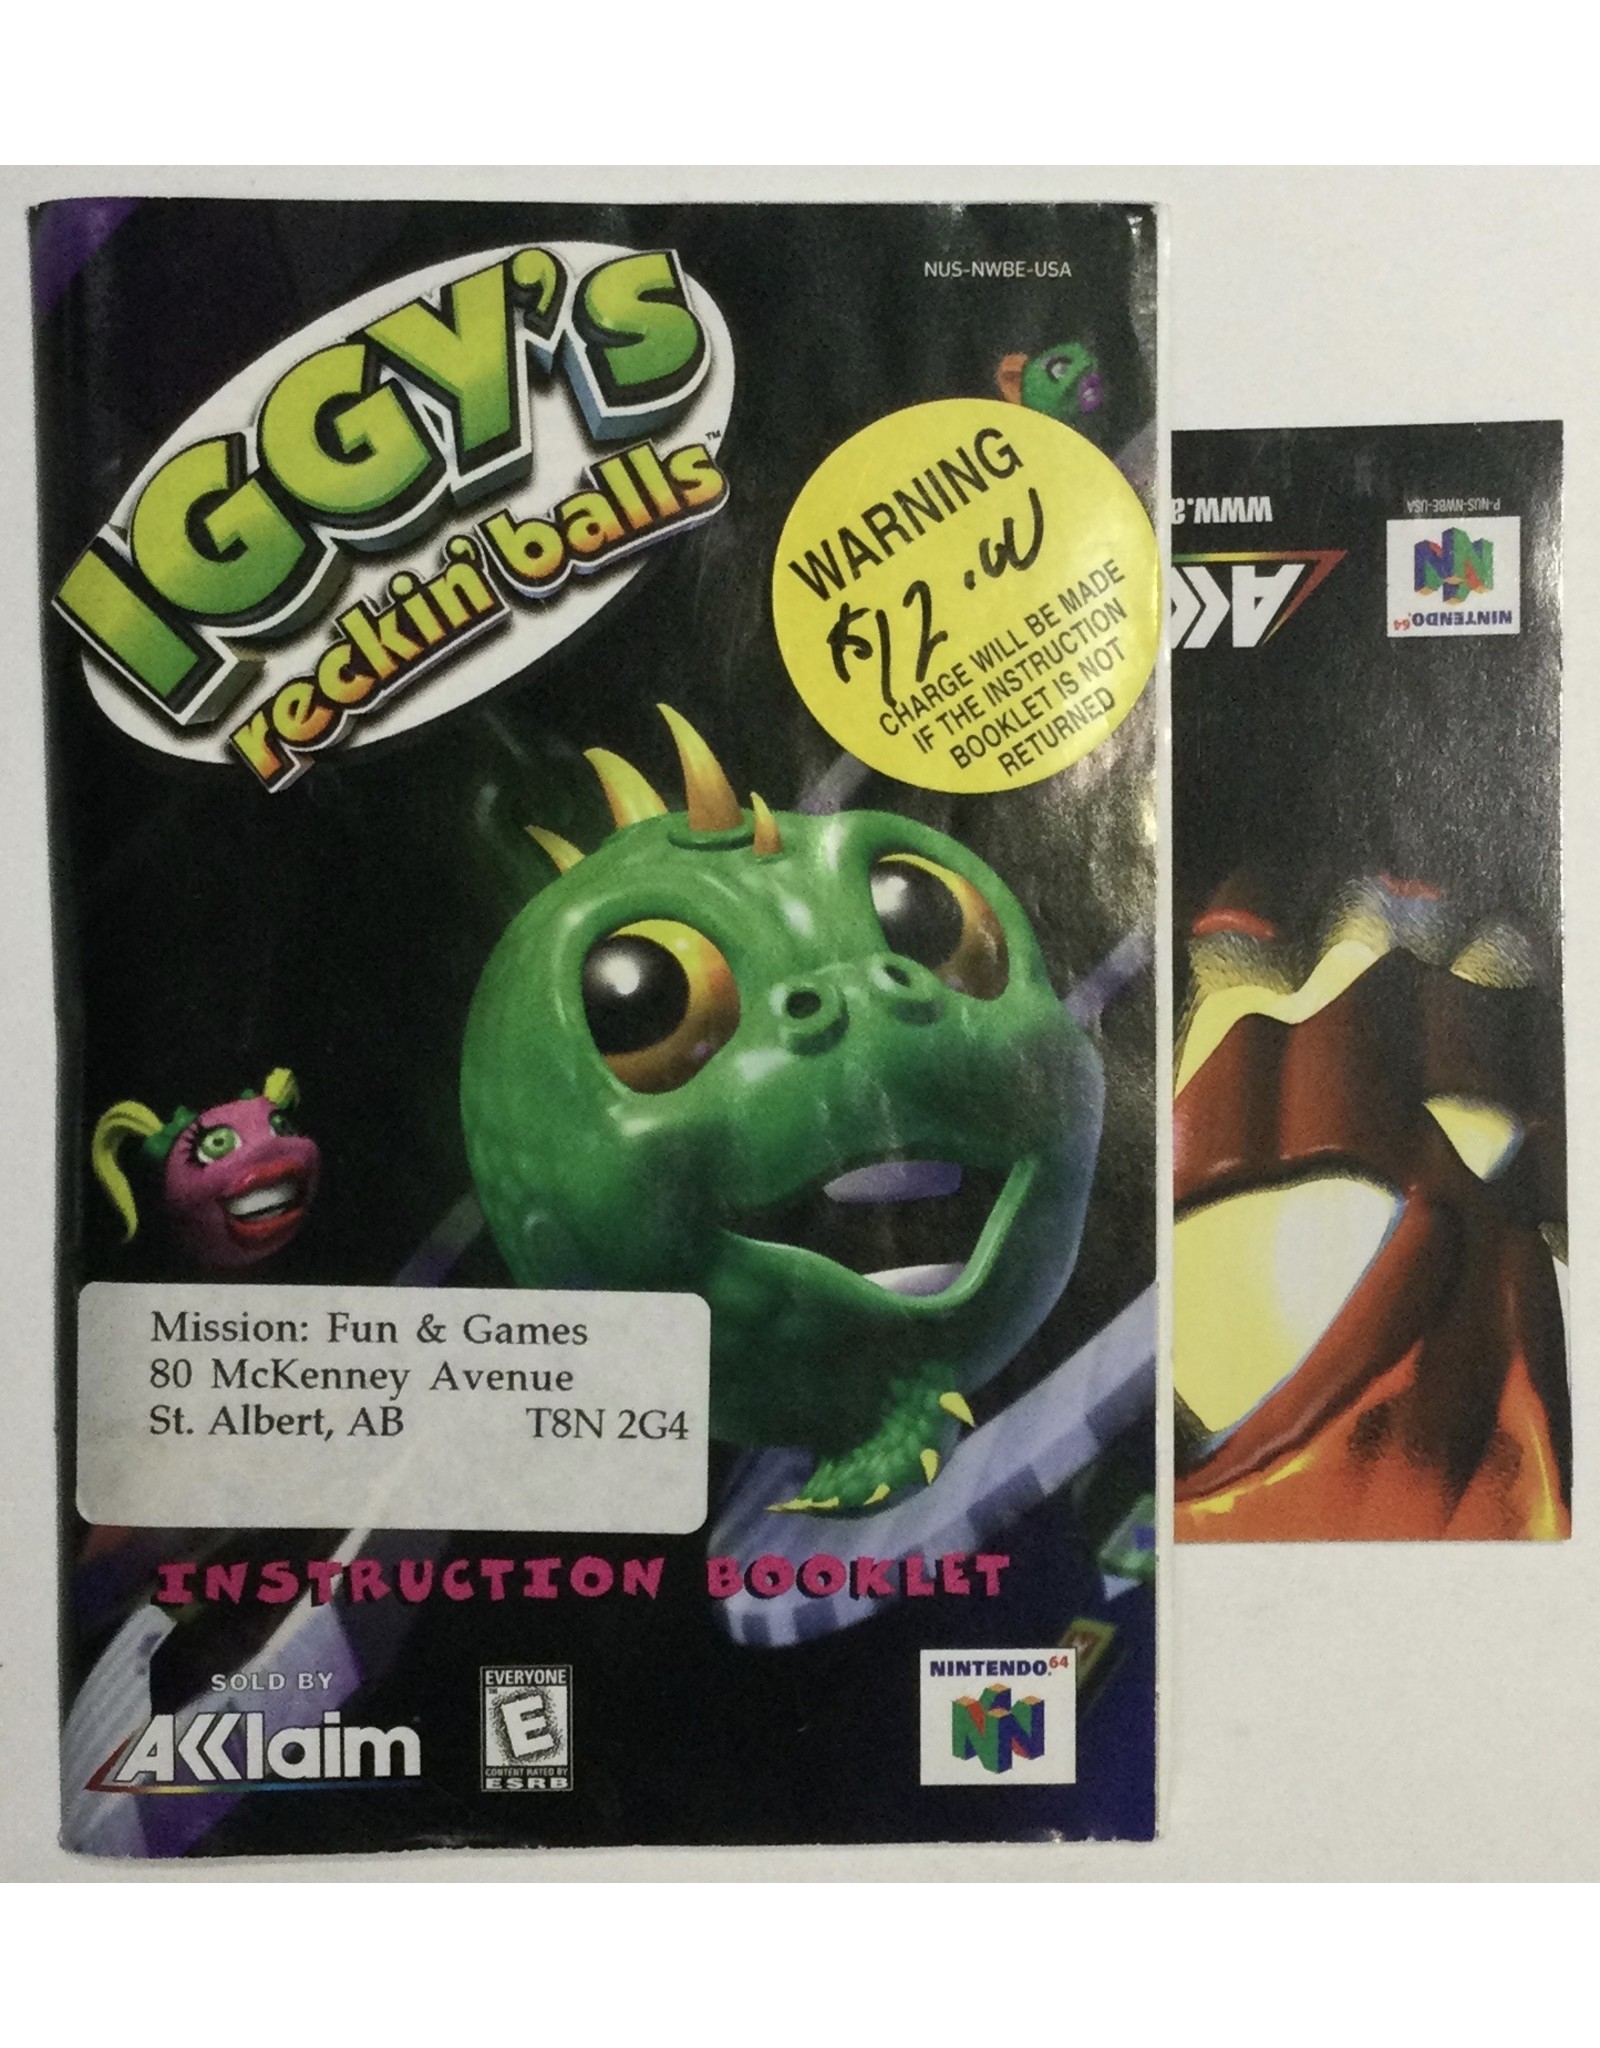 ACCLAIM Iggy's Recking' Balls for Nintendo 64 (N64) - CIB